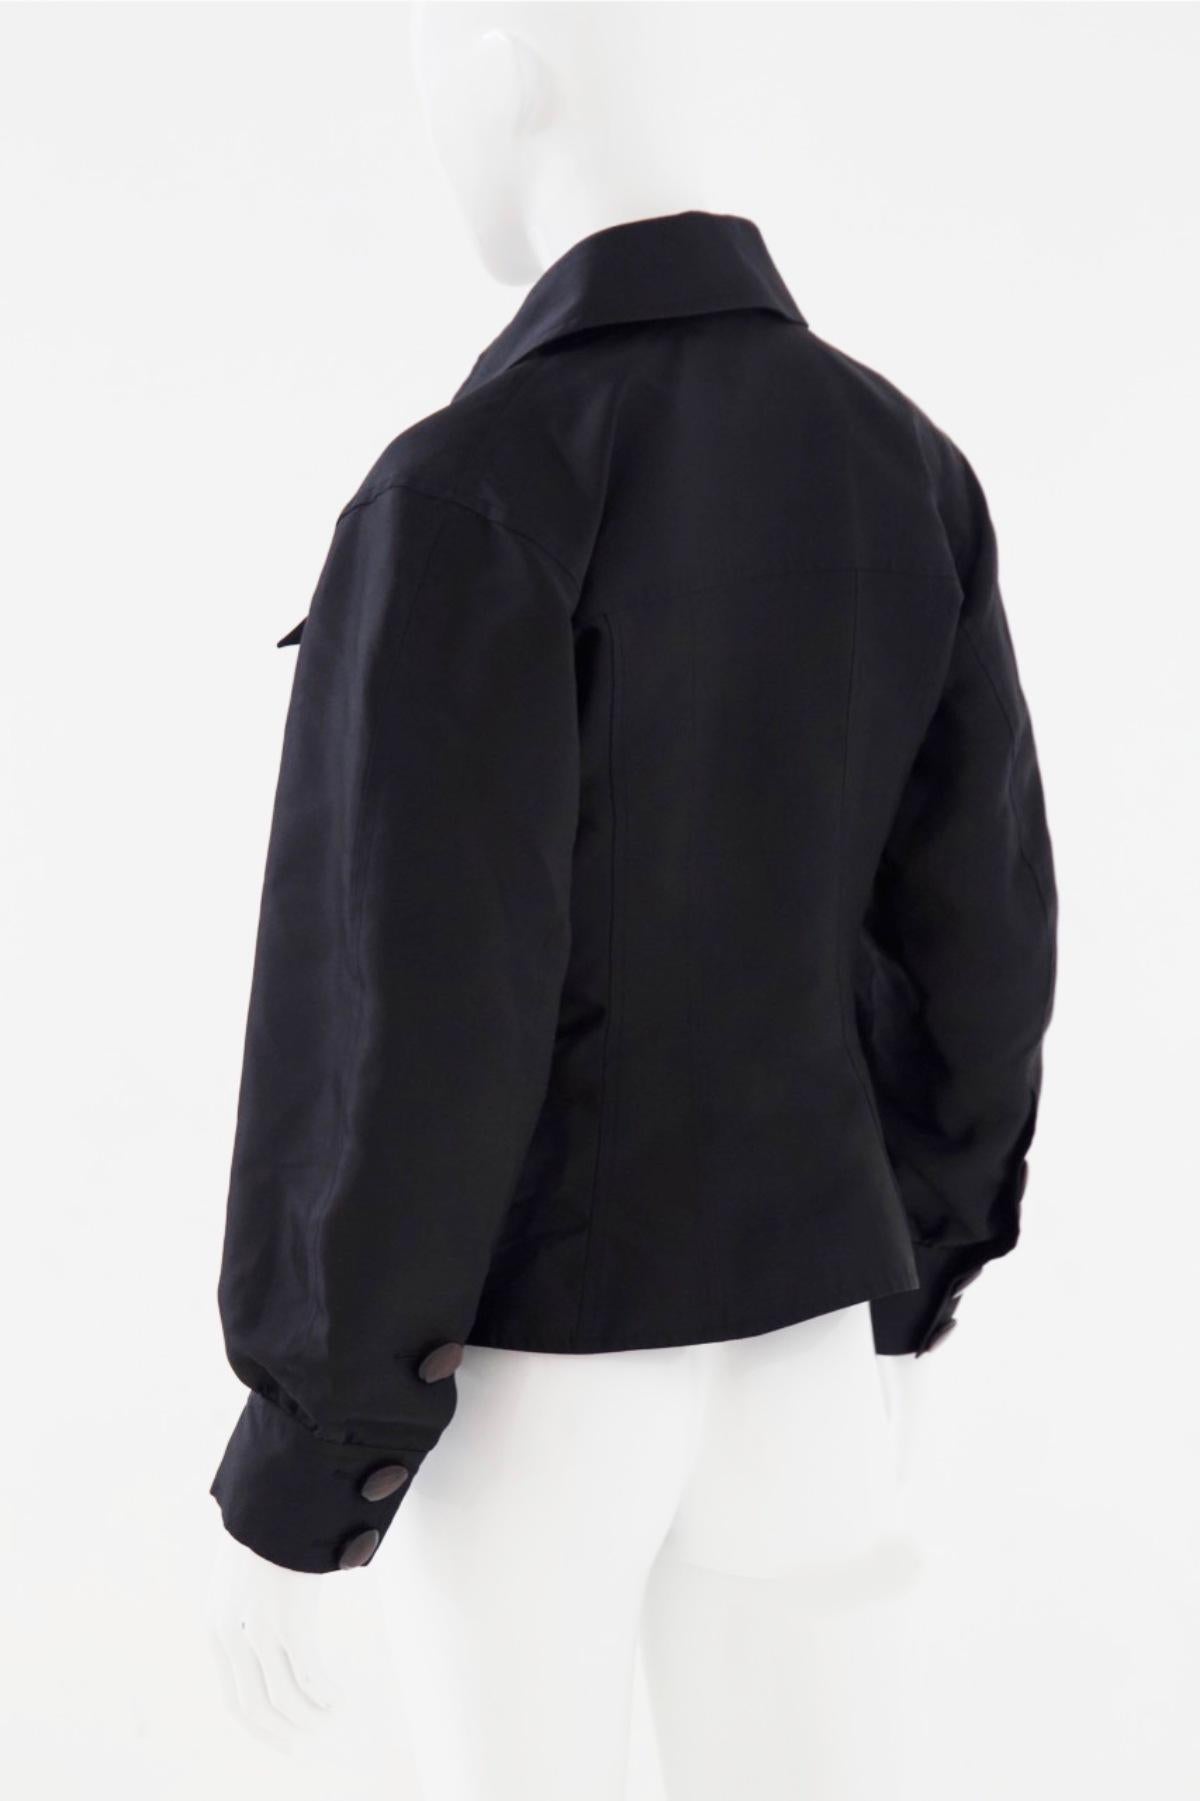 Christian Lacroix Vintage Black Jacket w Shoulder Pads For Sale 2